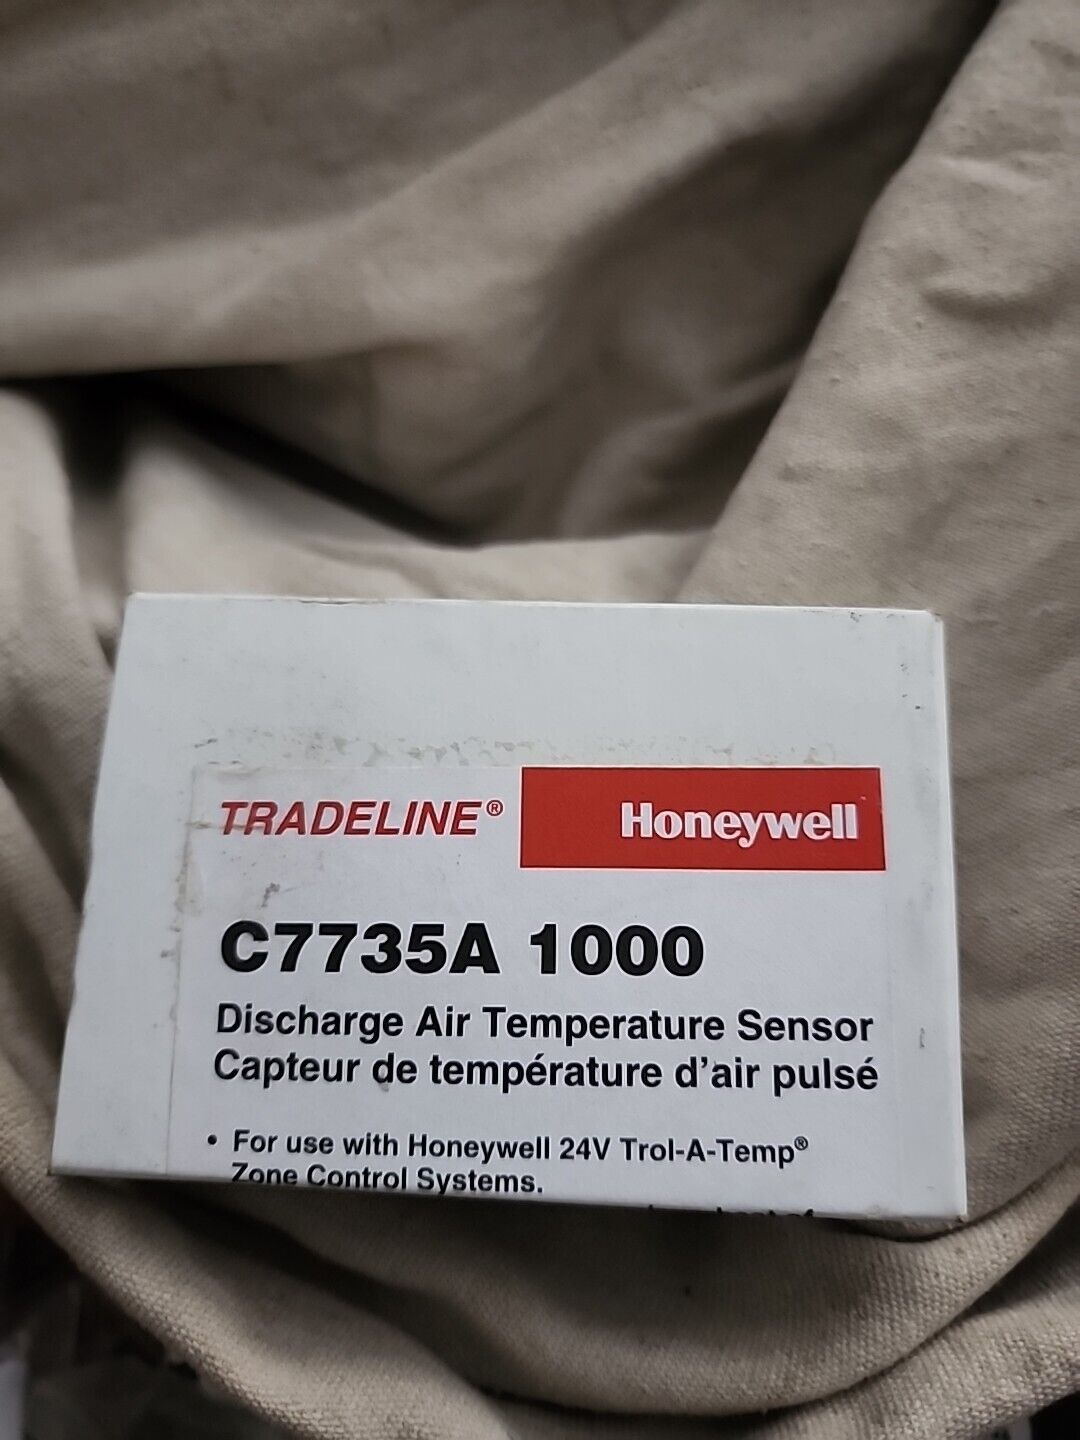 Honeywell C7735A 1000 Discharge Air Temperature Sensor